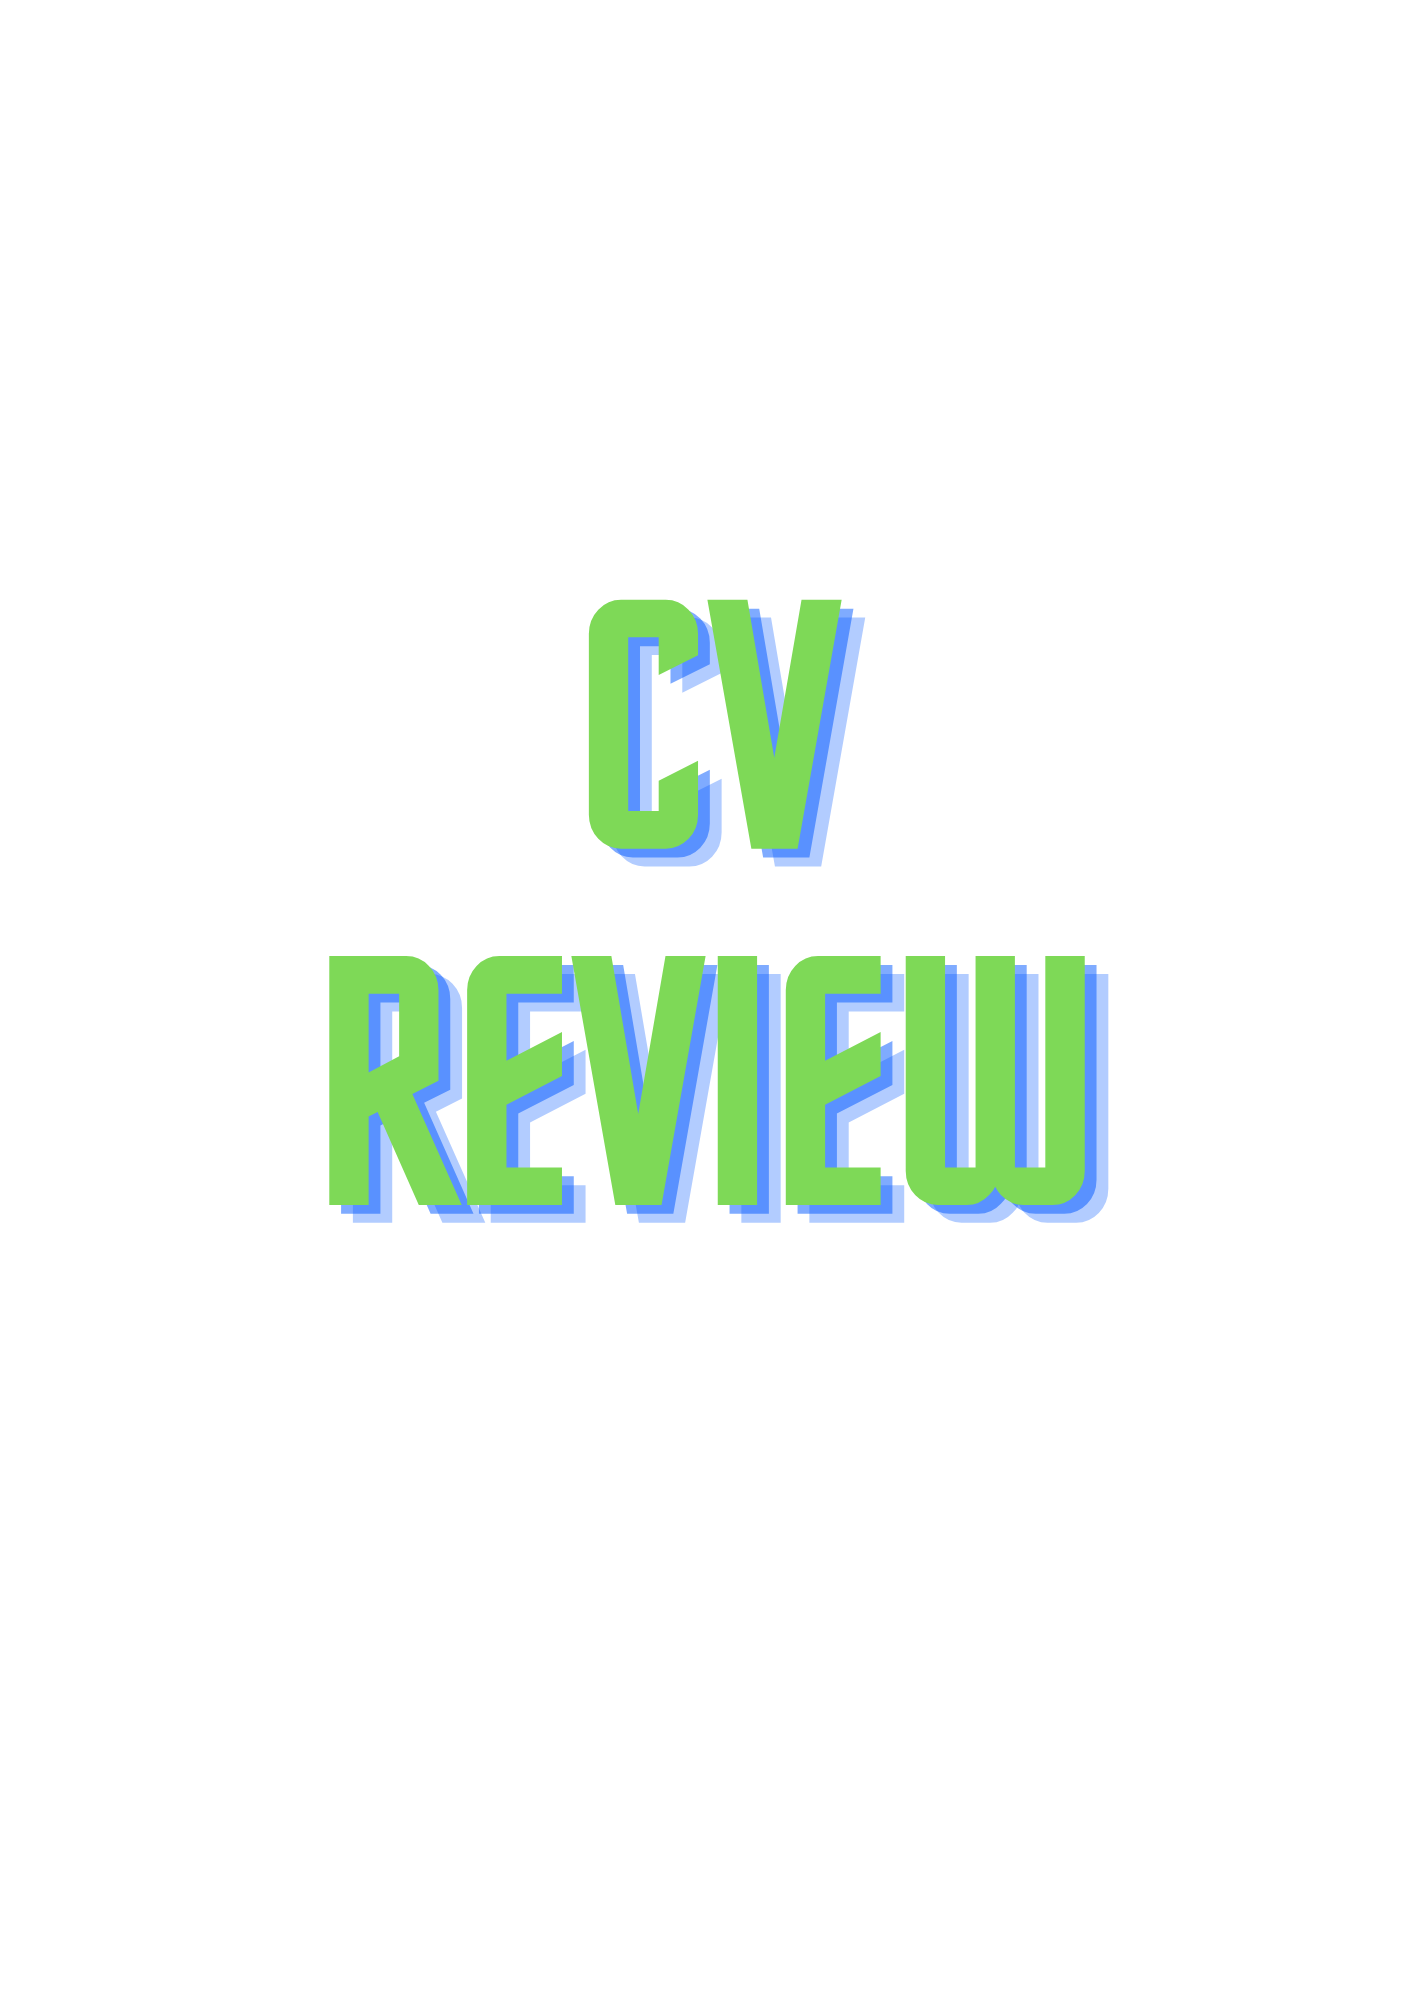 Comprehensive CV Review *1 DAY TURNAROUND*